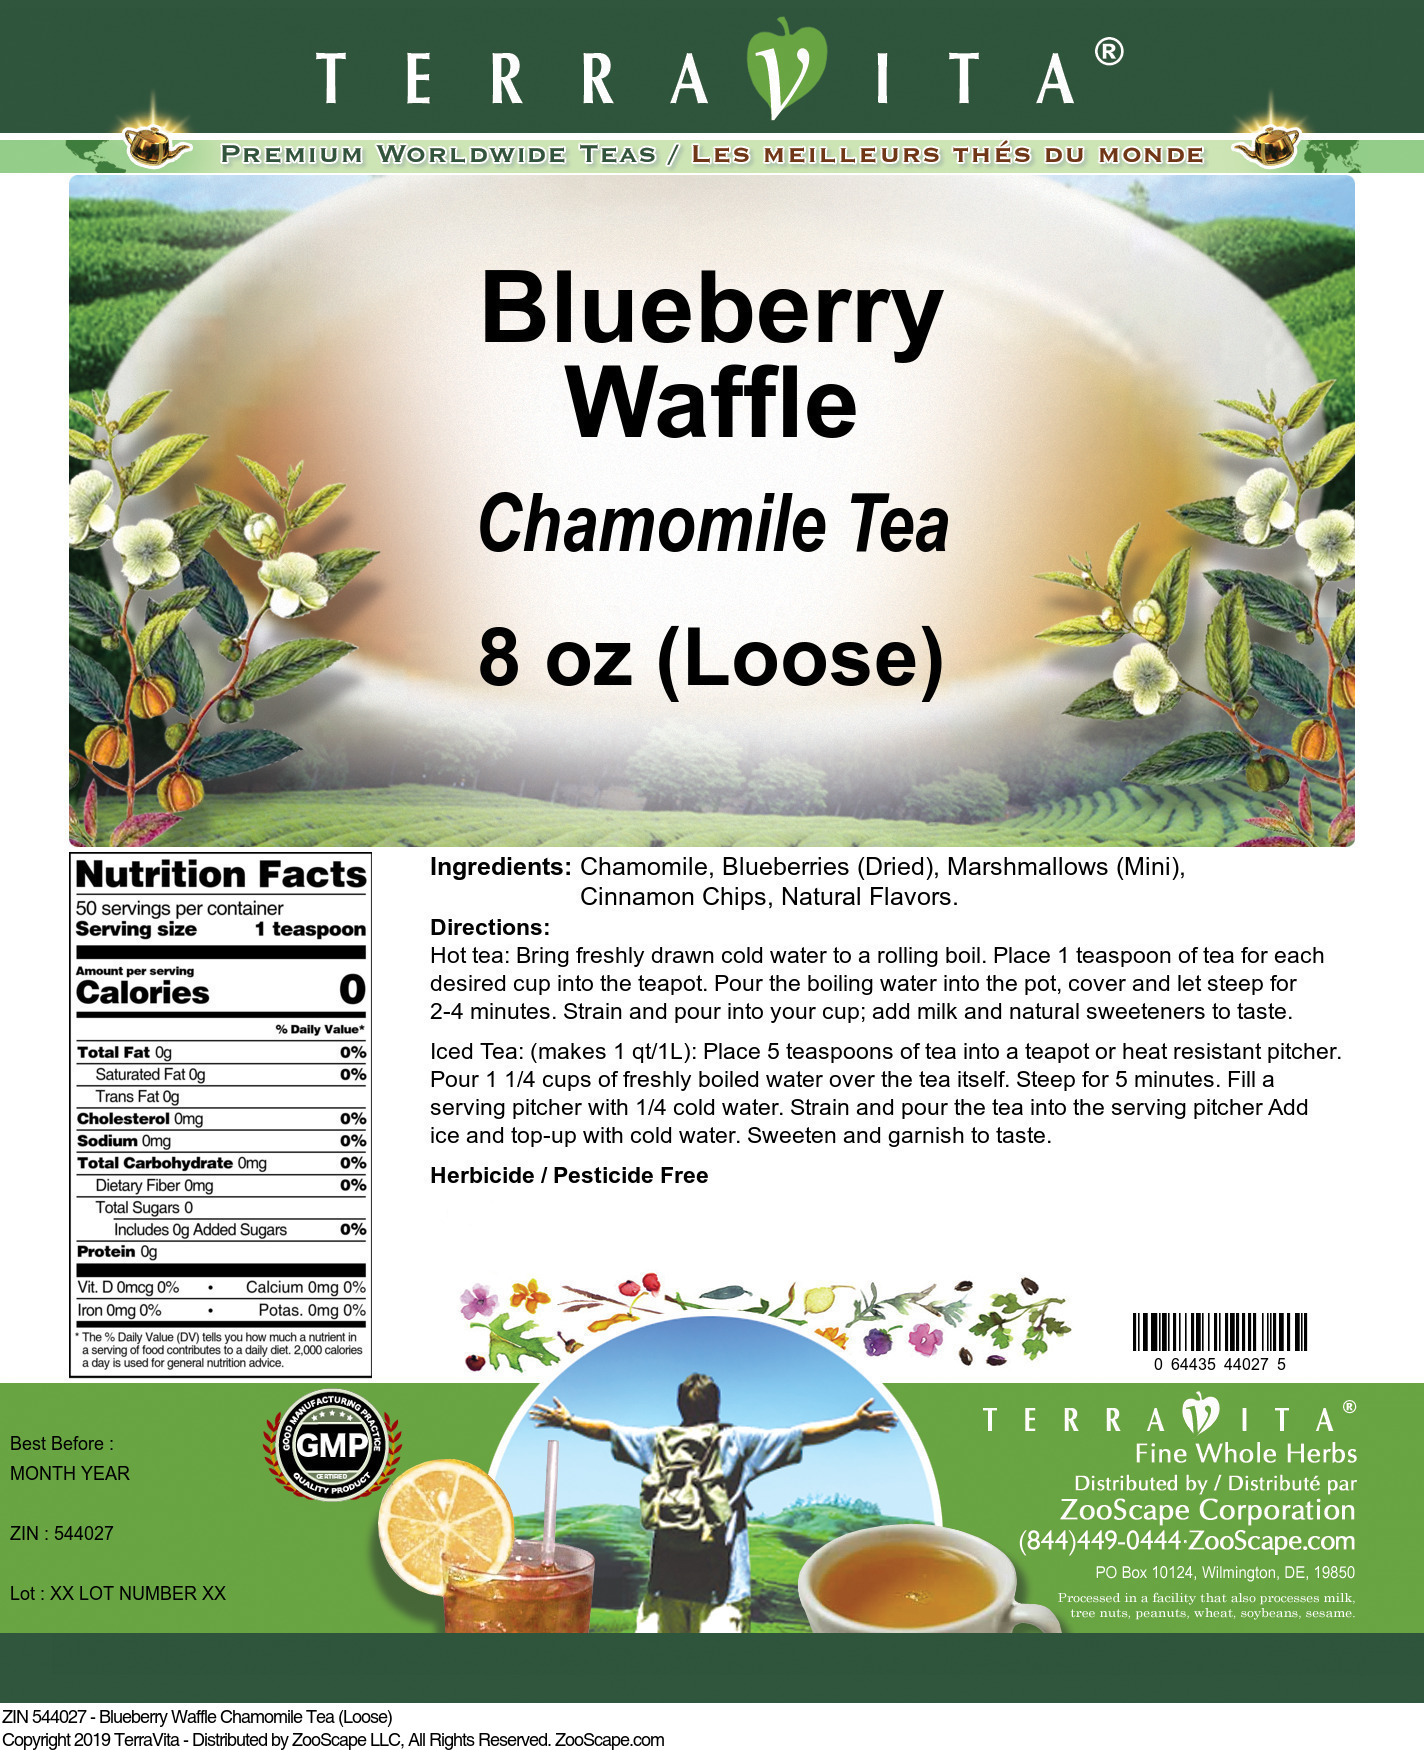 Blueberry Waffle Chamomile Tea (Loose) - Label